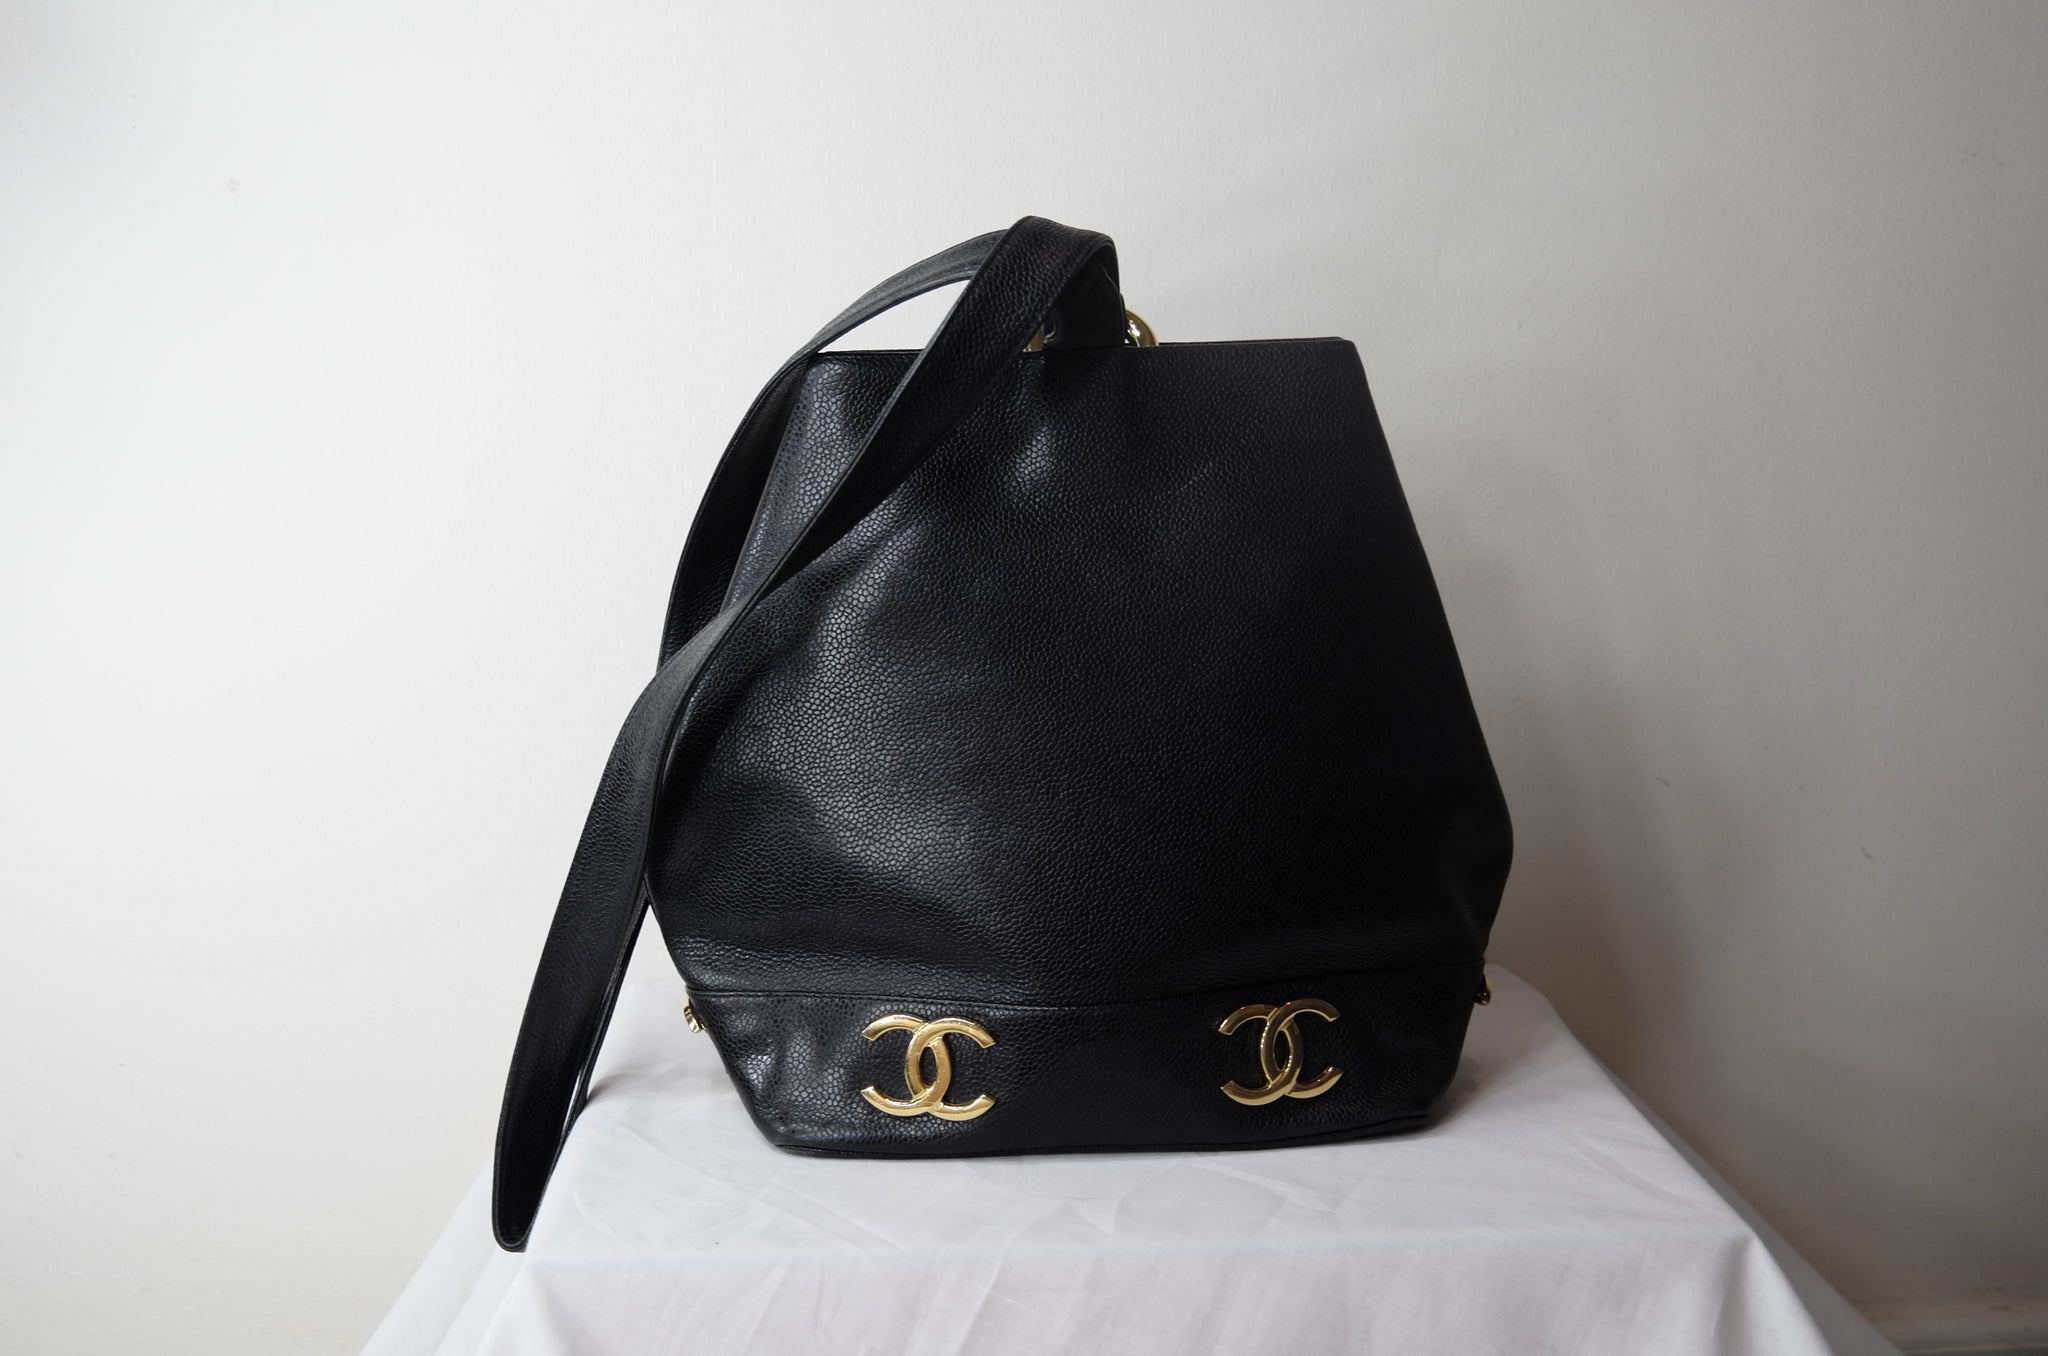 Chanel Black and Cream CC Logo Caviar Leather Handbag